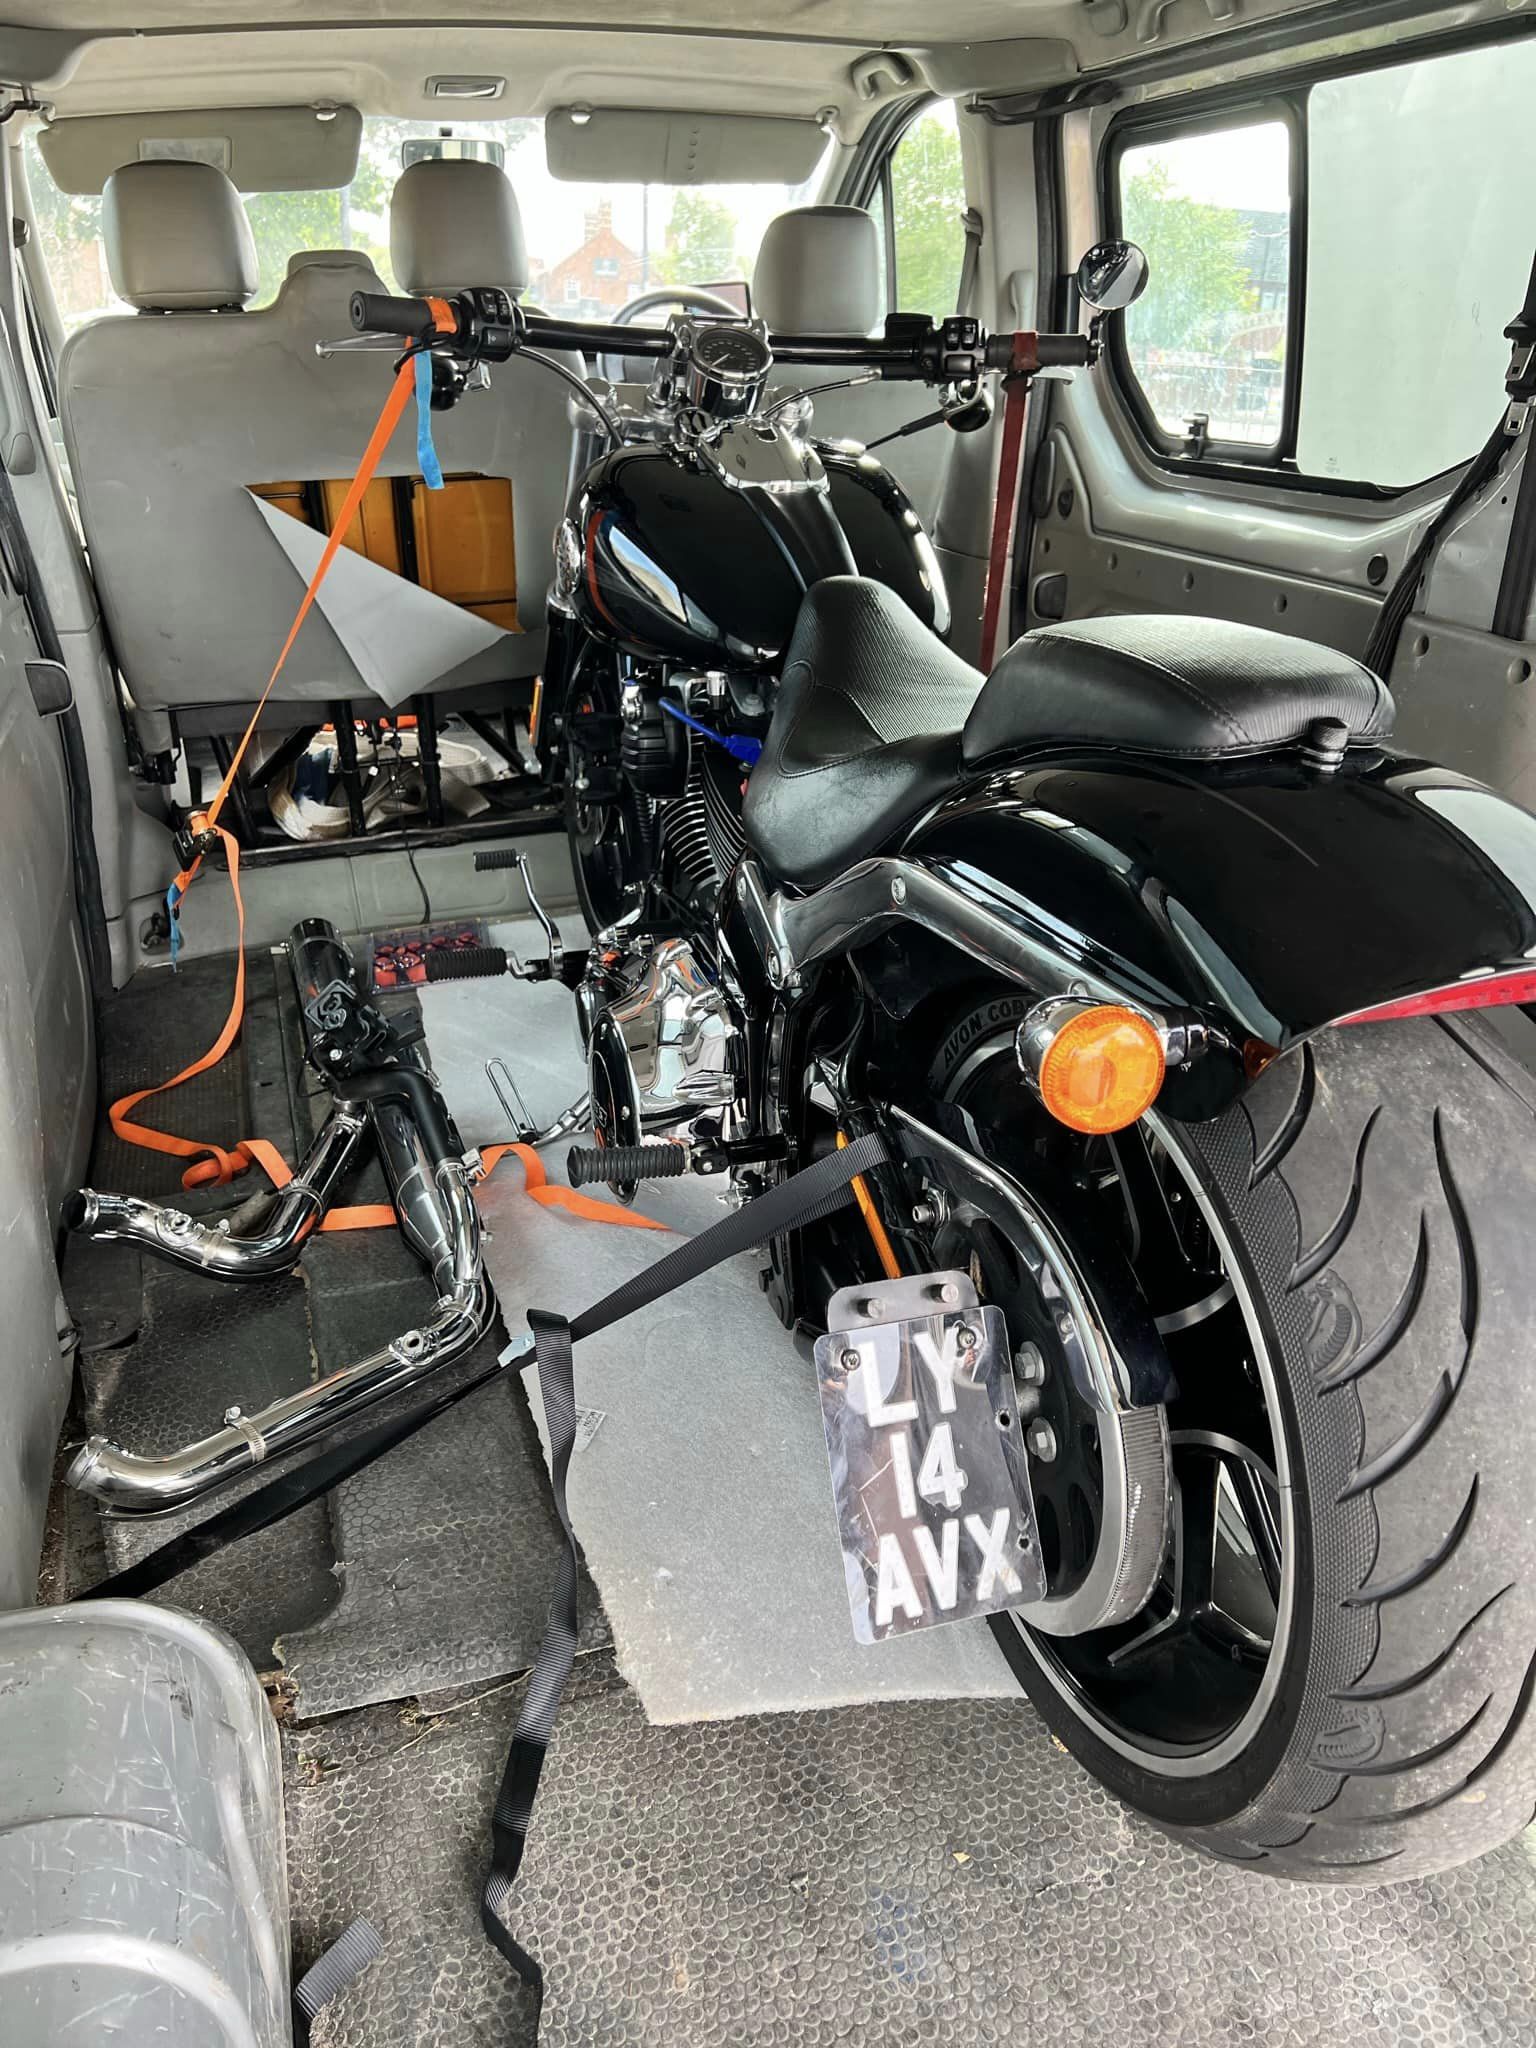 Motor bike loaded in back on van